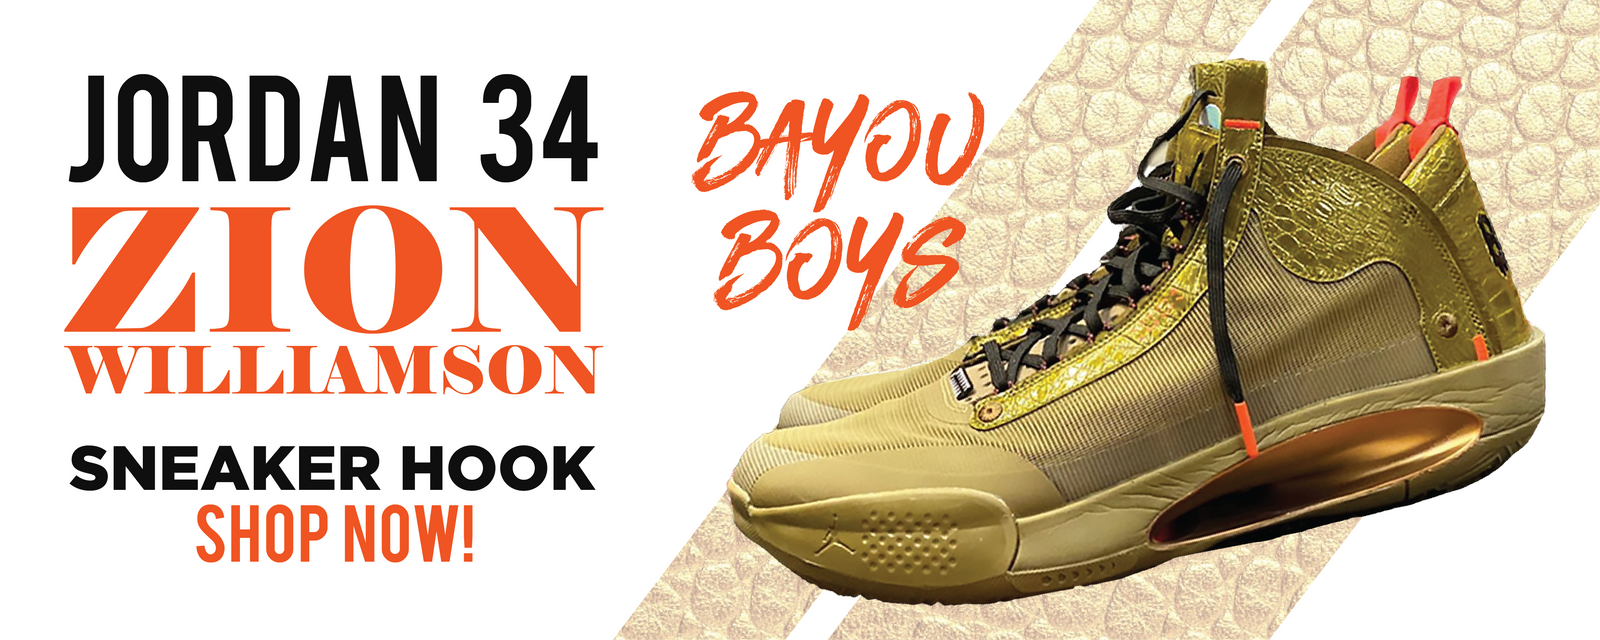 jordan 34 zion williamson pe bayou boys men's basketball shoes stores